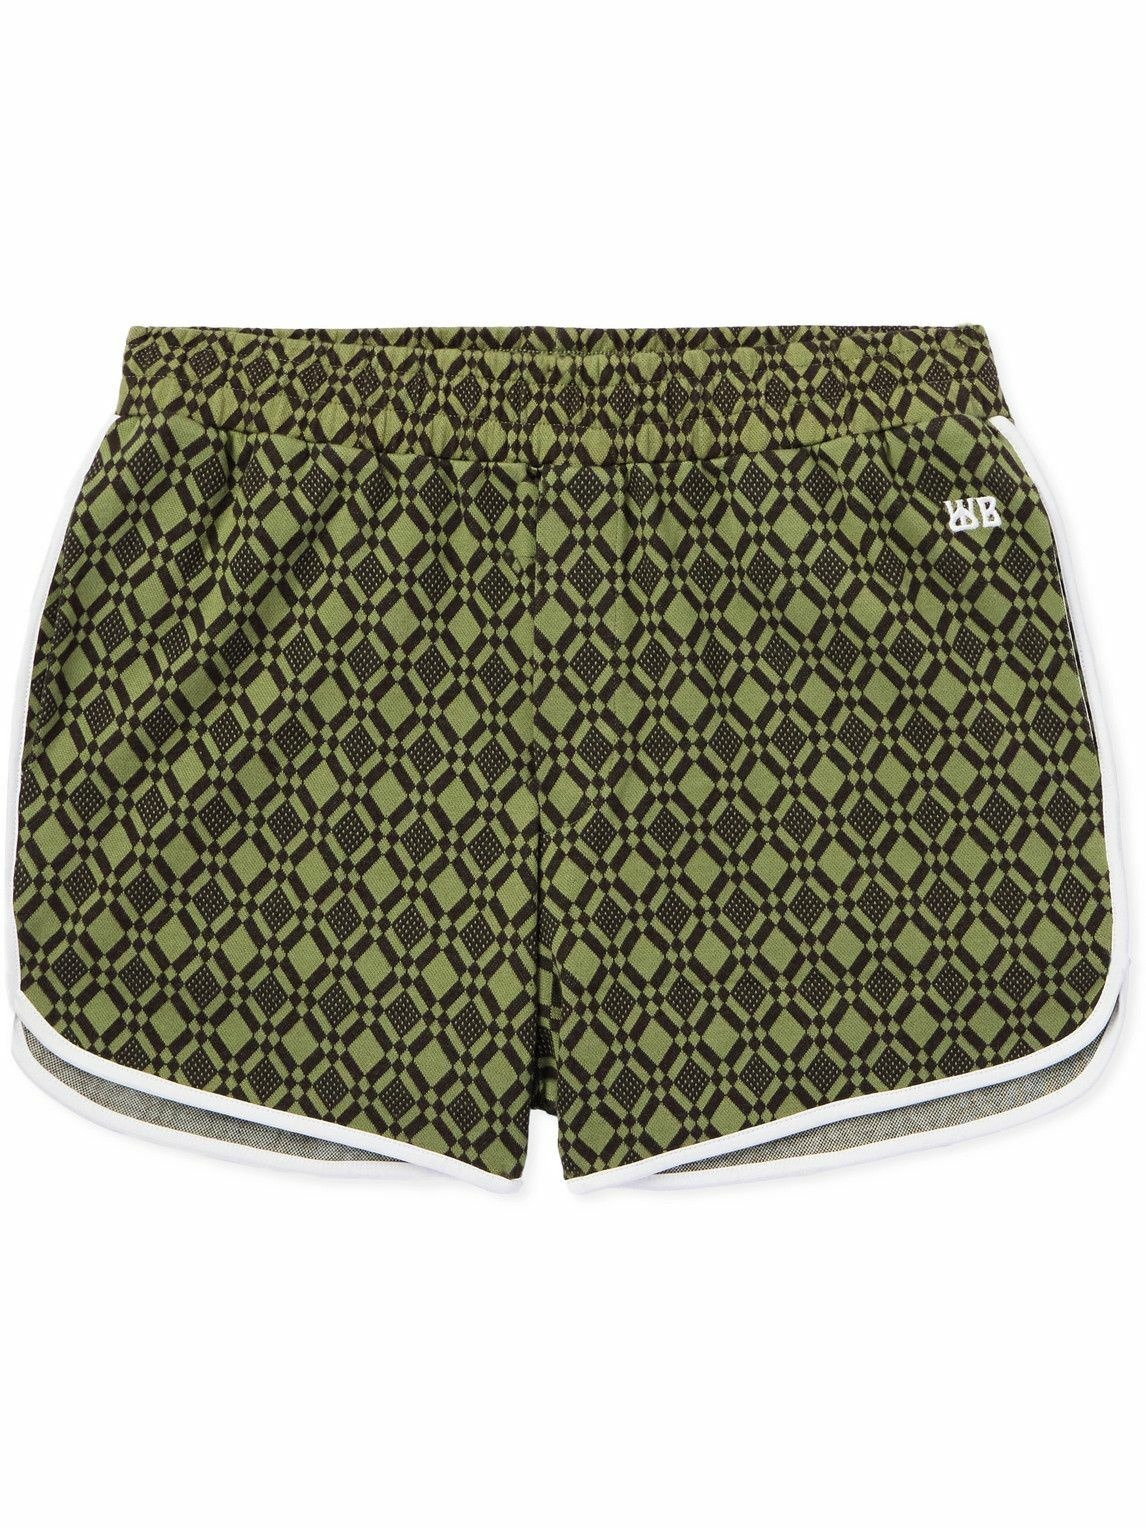 Photo: Wales Bonner - The Selassie Straight-Leg Jacquard-Knit Stretch Organic Cotton Shorts - Green